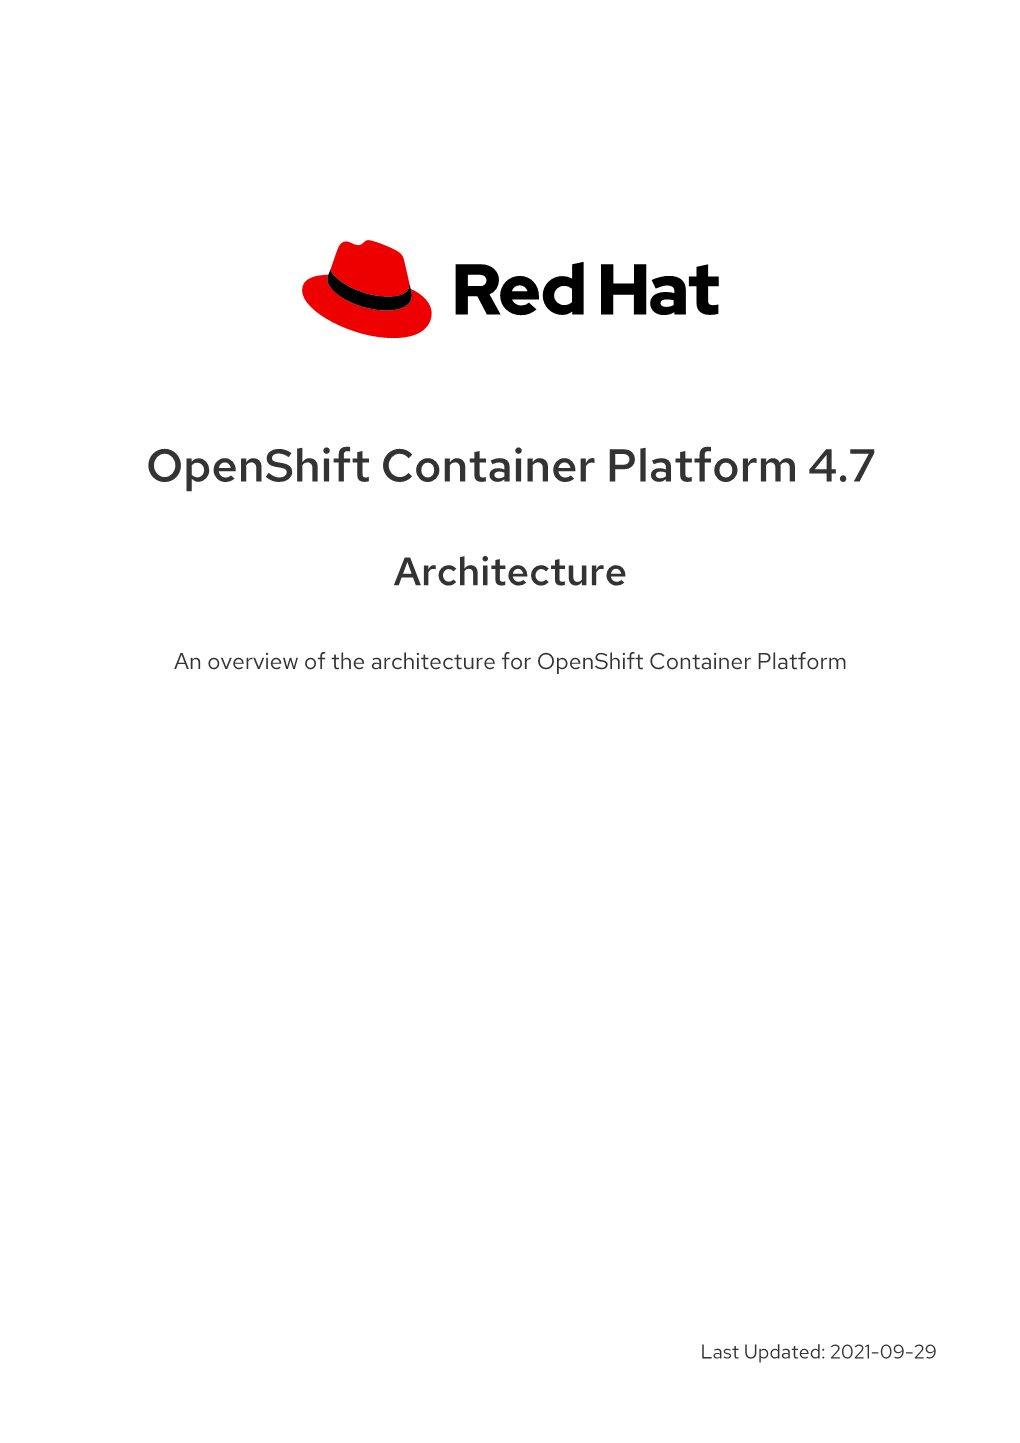 Openshift Container Platform 4.7 Architecture